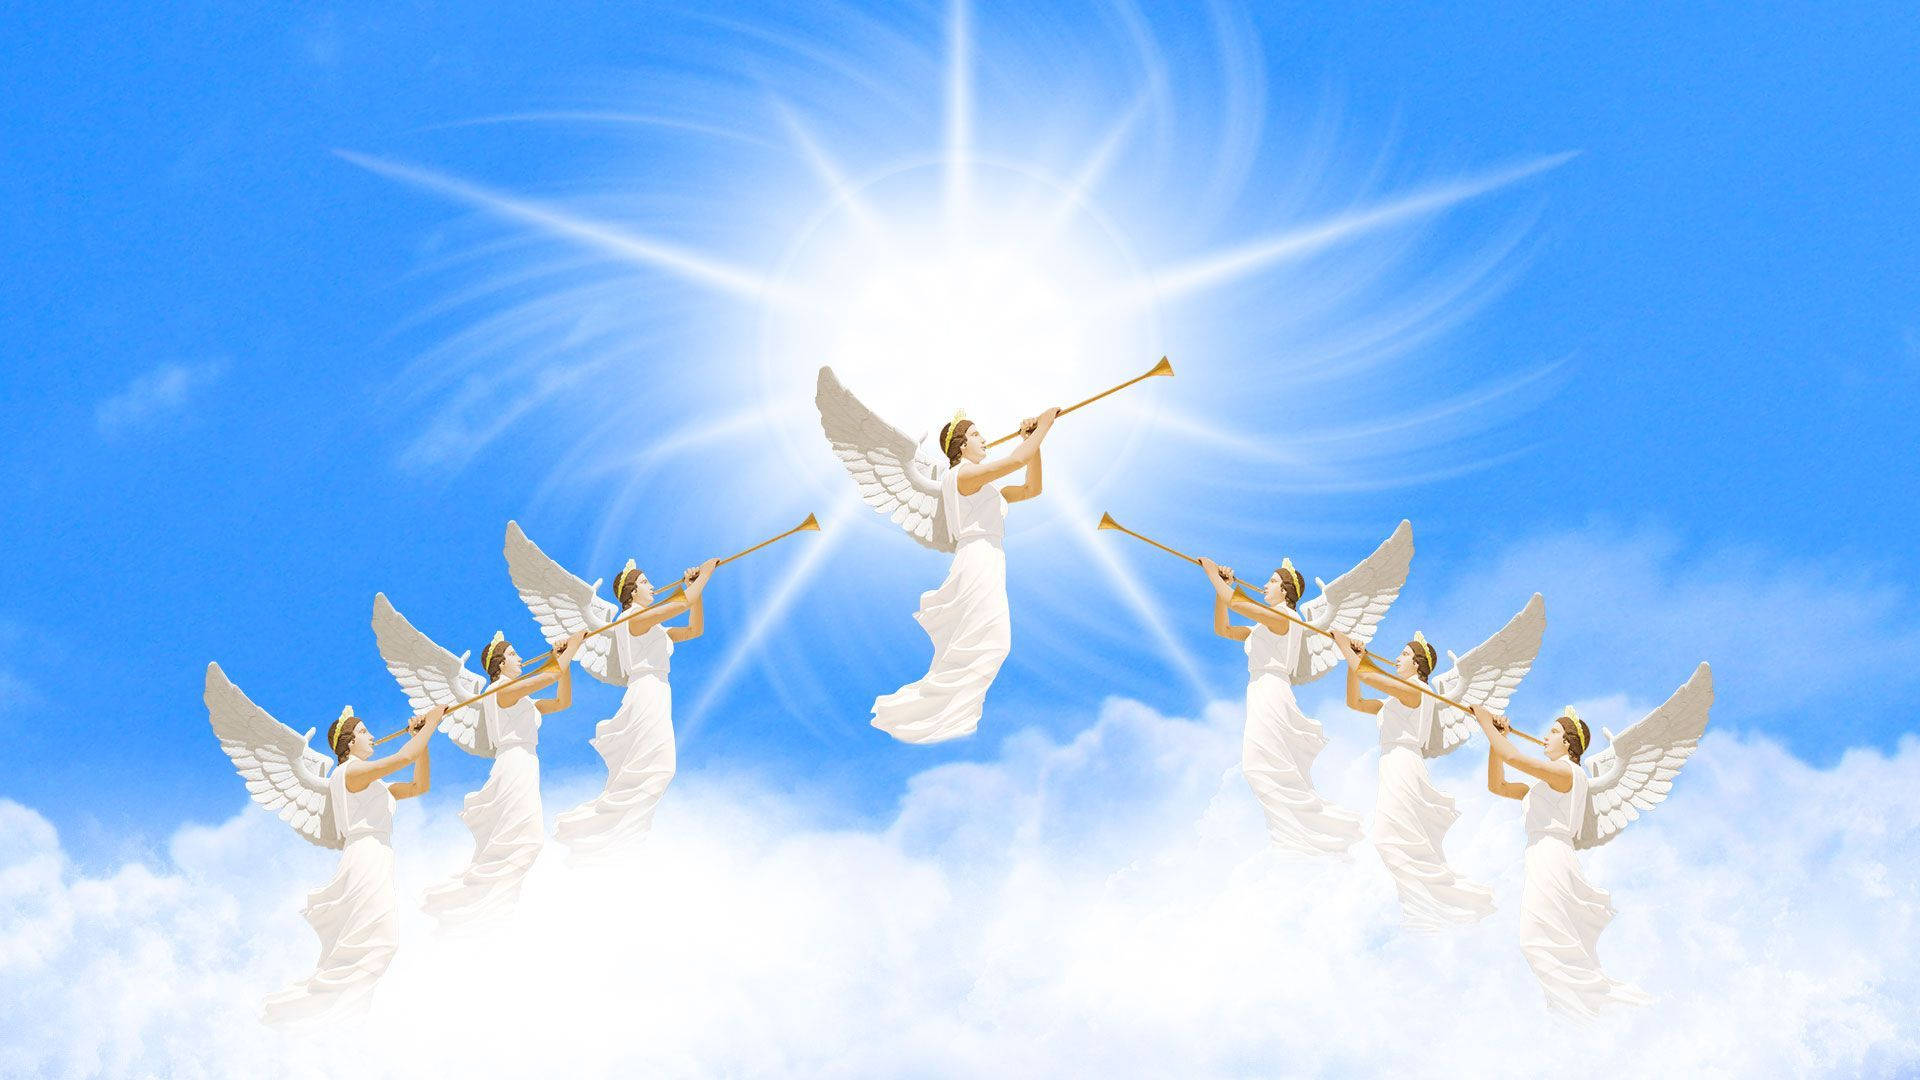 Free Biblical Angels Wallpaper Downloads, Biblical Angels Wallpaper for FREE